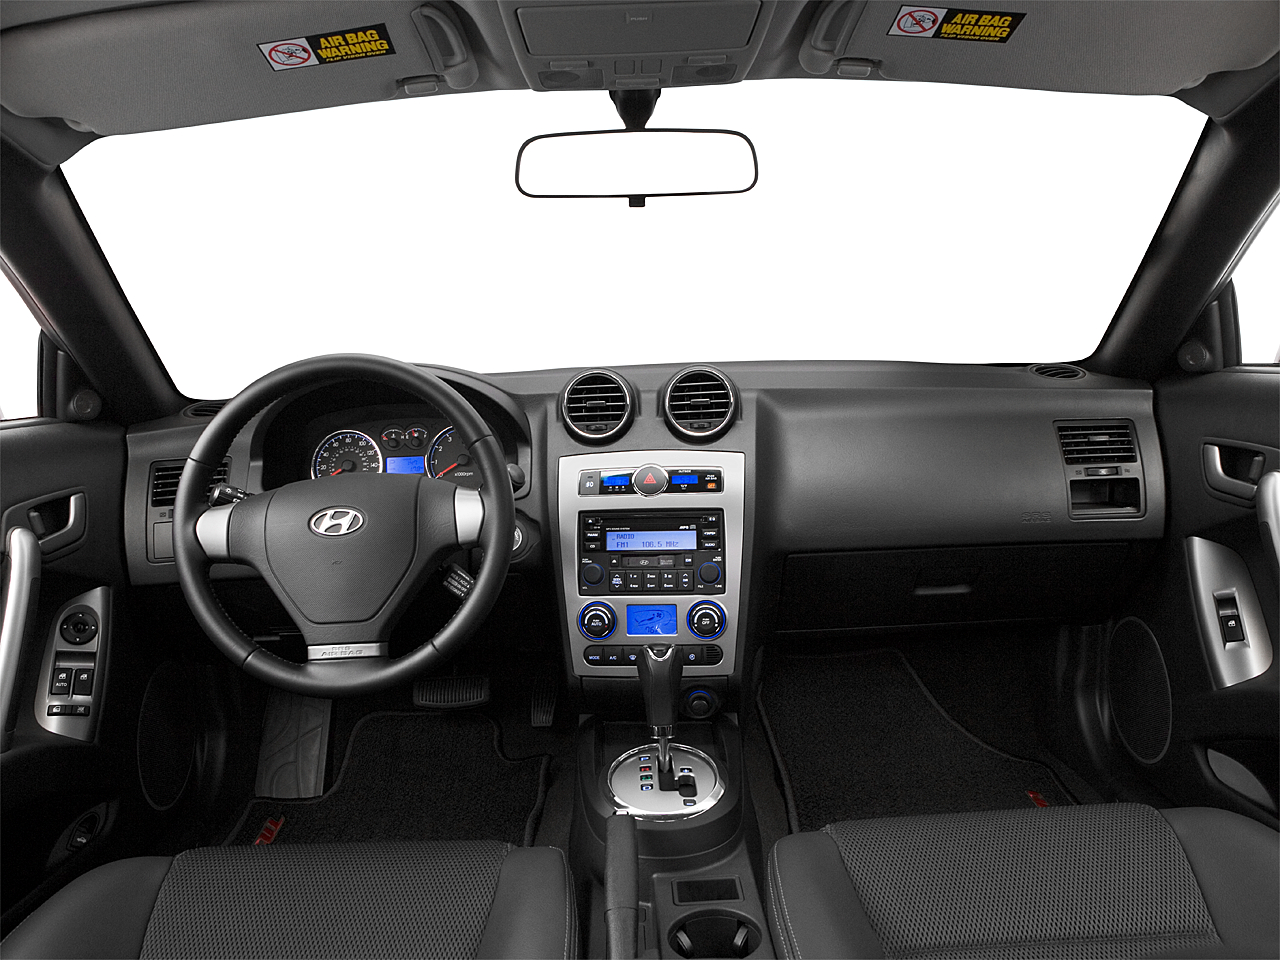 2007 Hyundai Tiburon GT 2dr Hatchback (2.7L V6 4A) - Research - GrooveCar